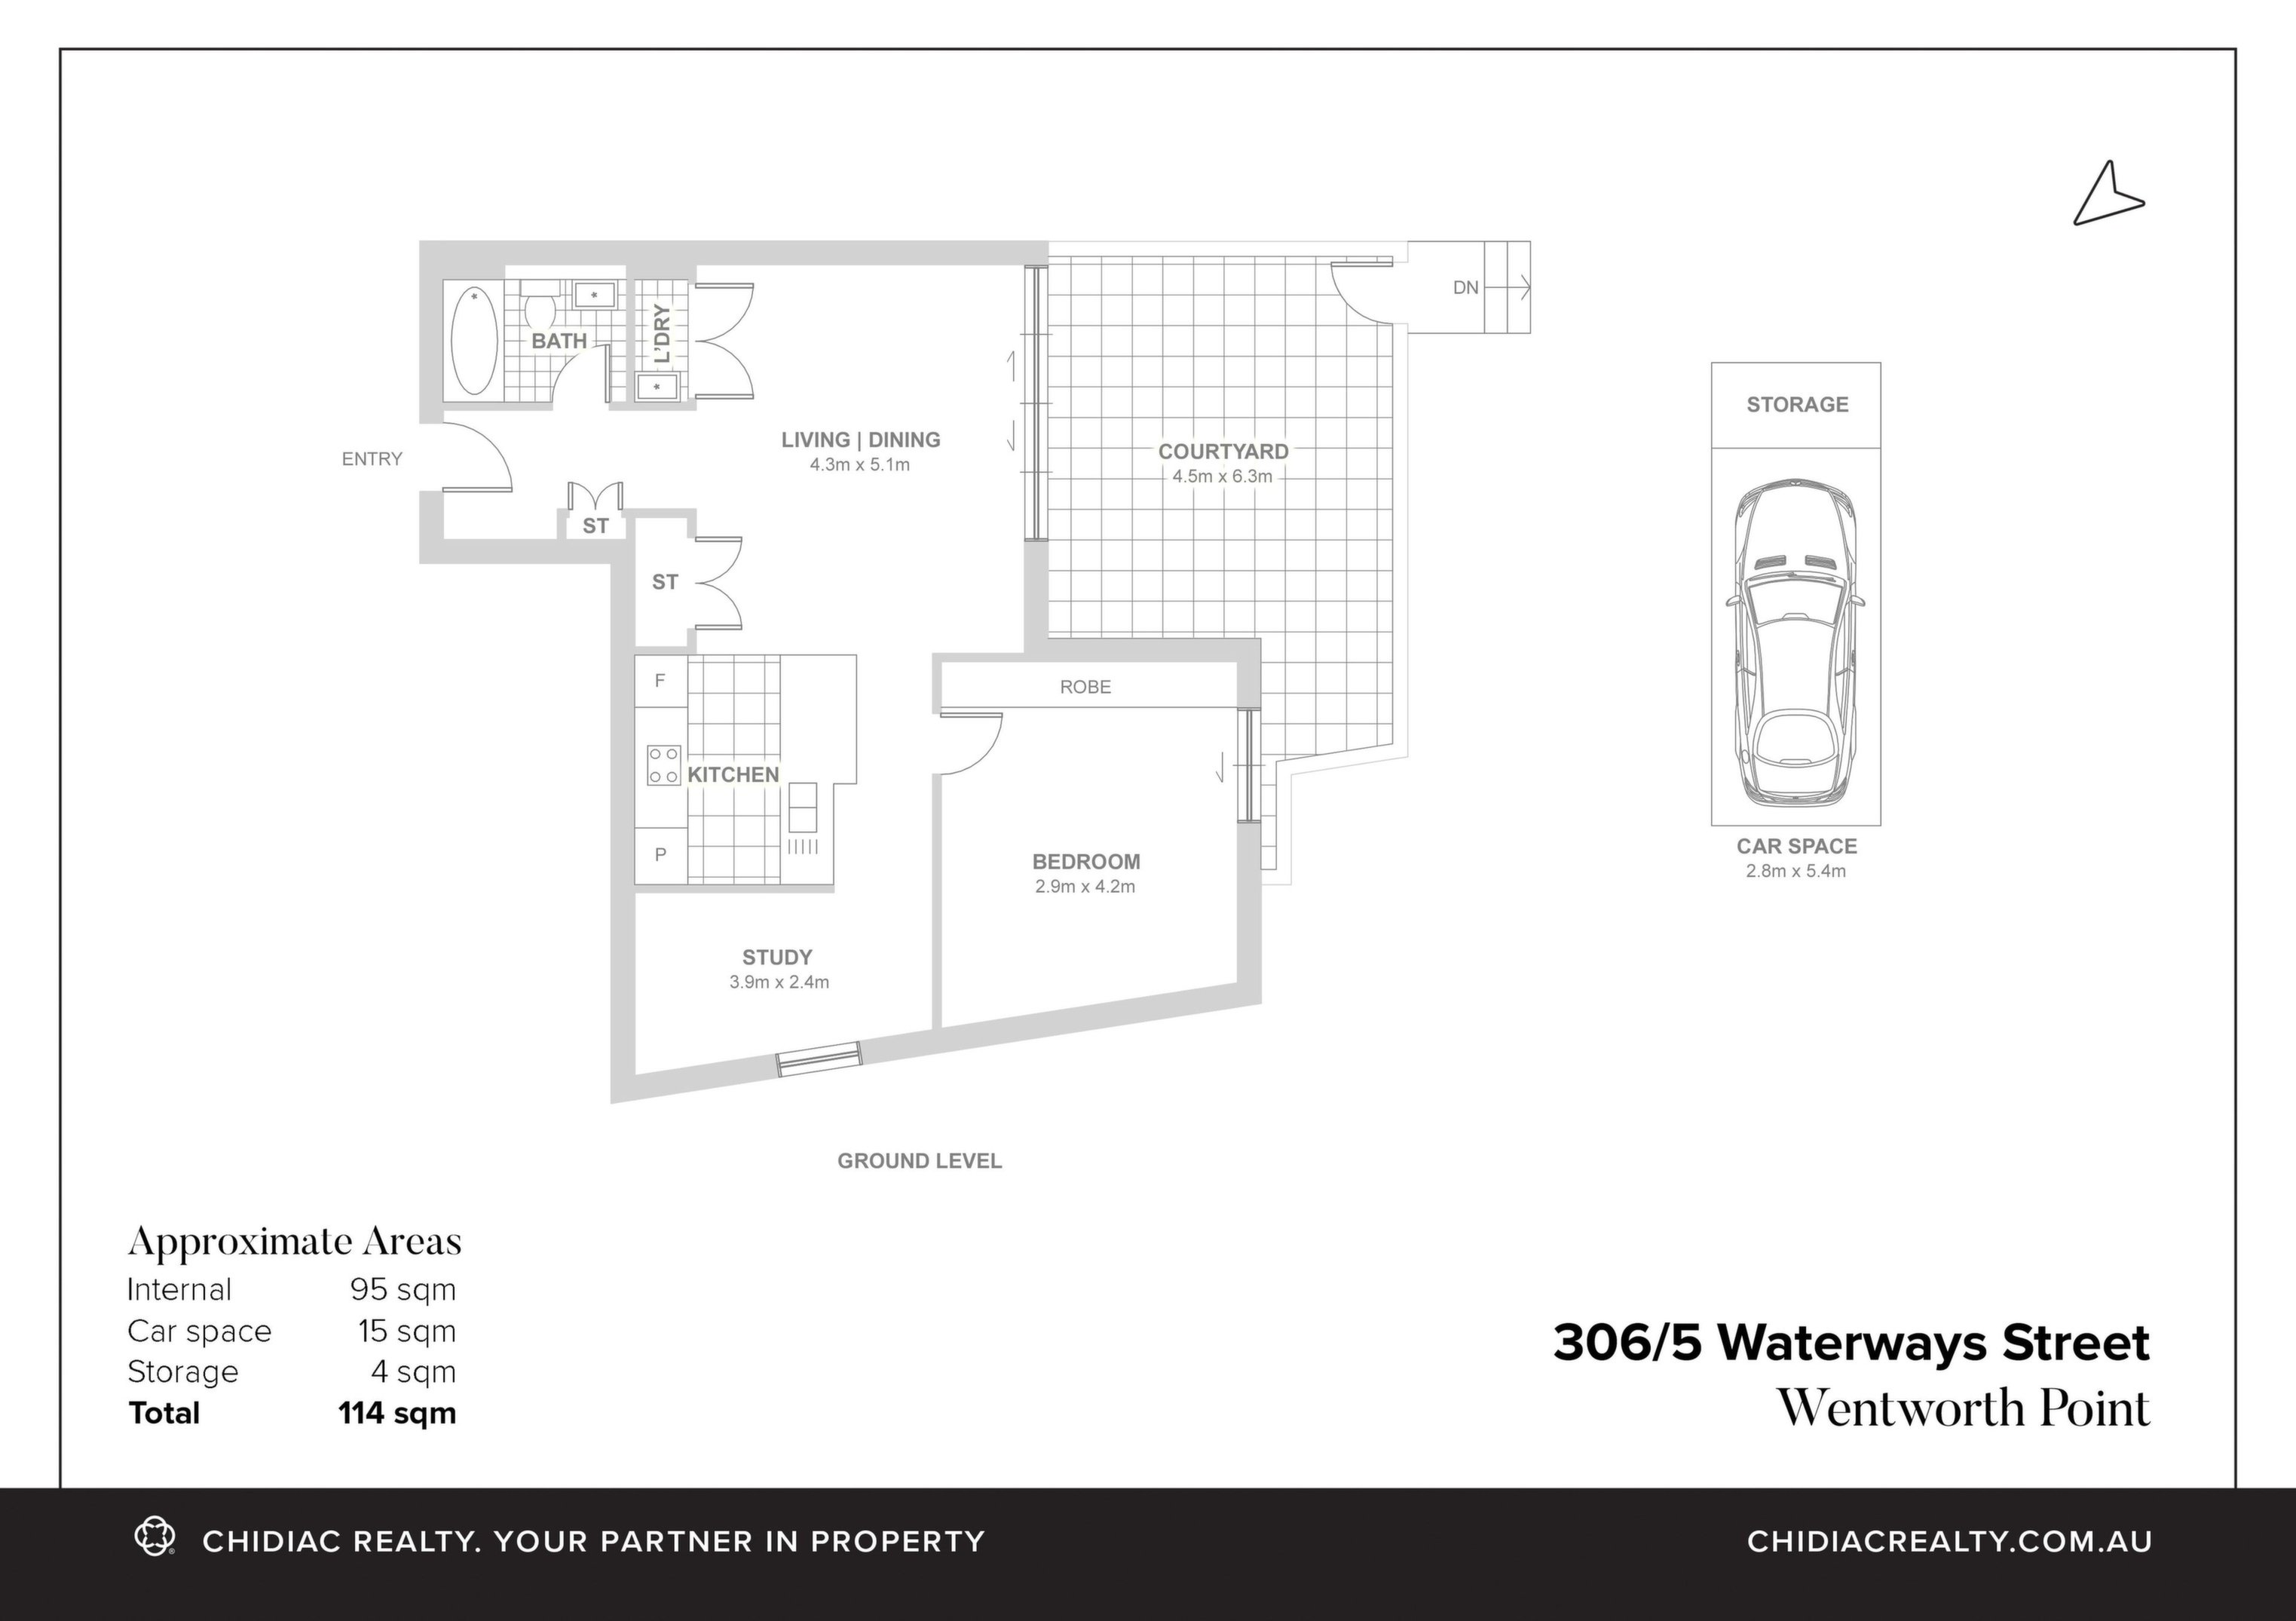 306/5 Waterways Street, Wentworth Point Sold by Chidiac Realty - floorplan